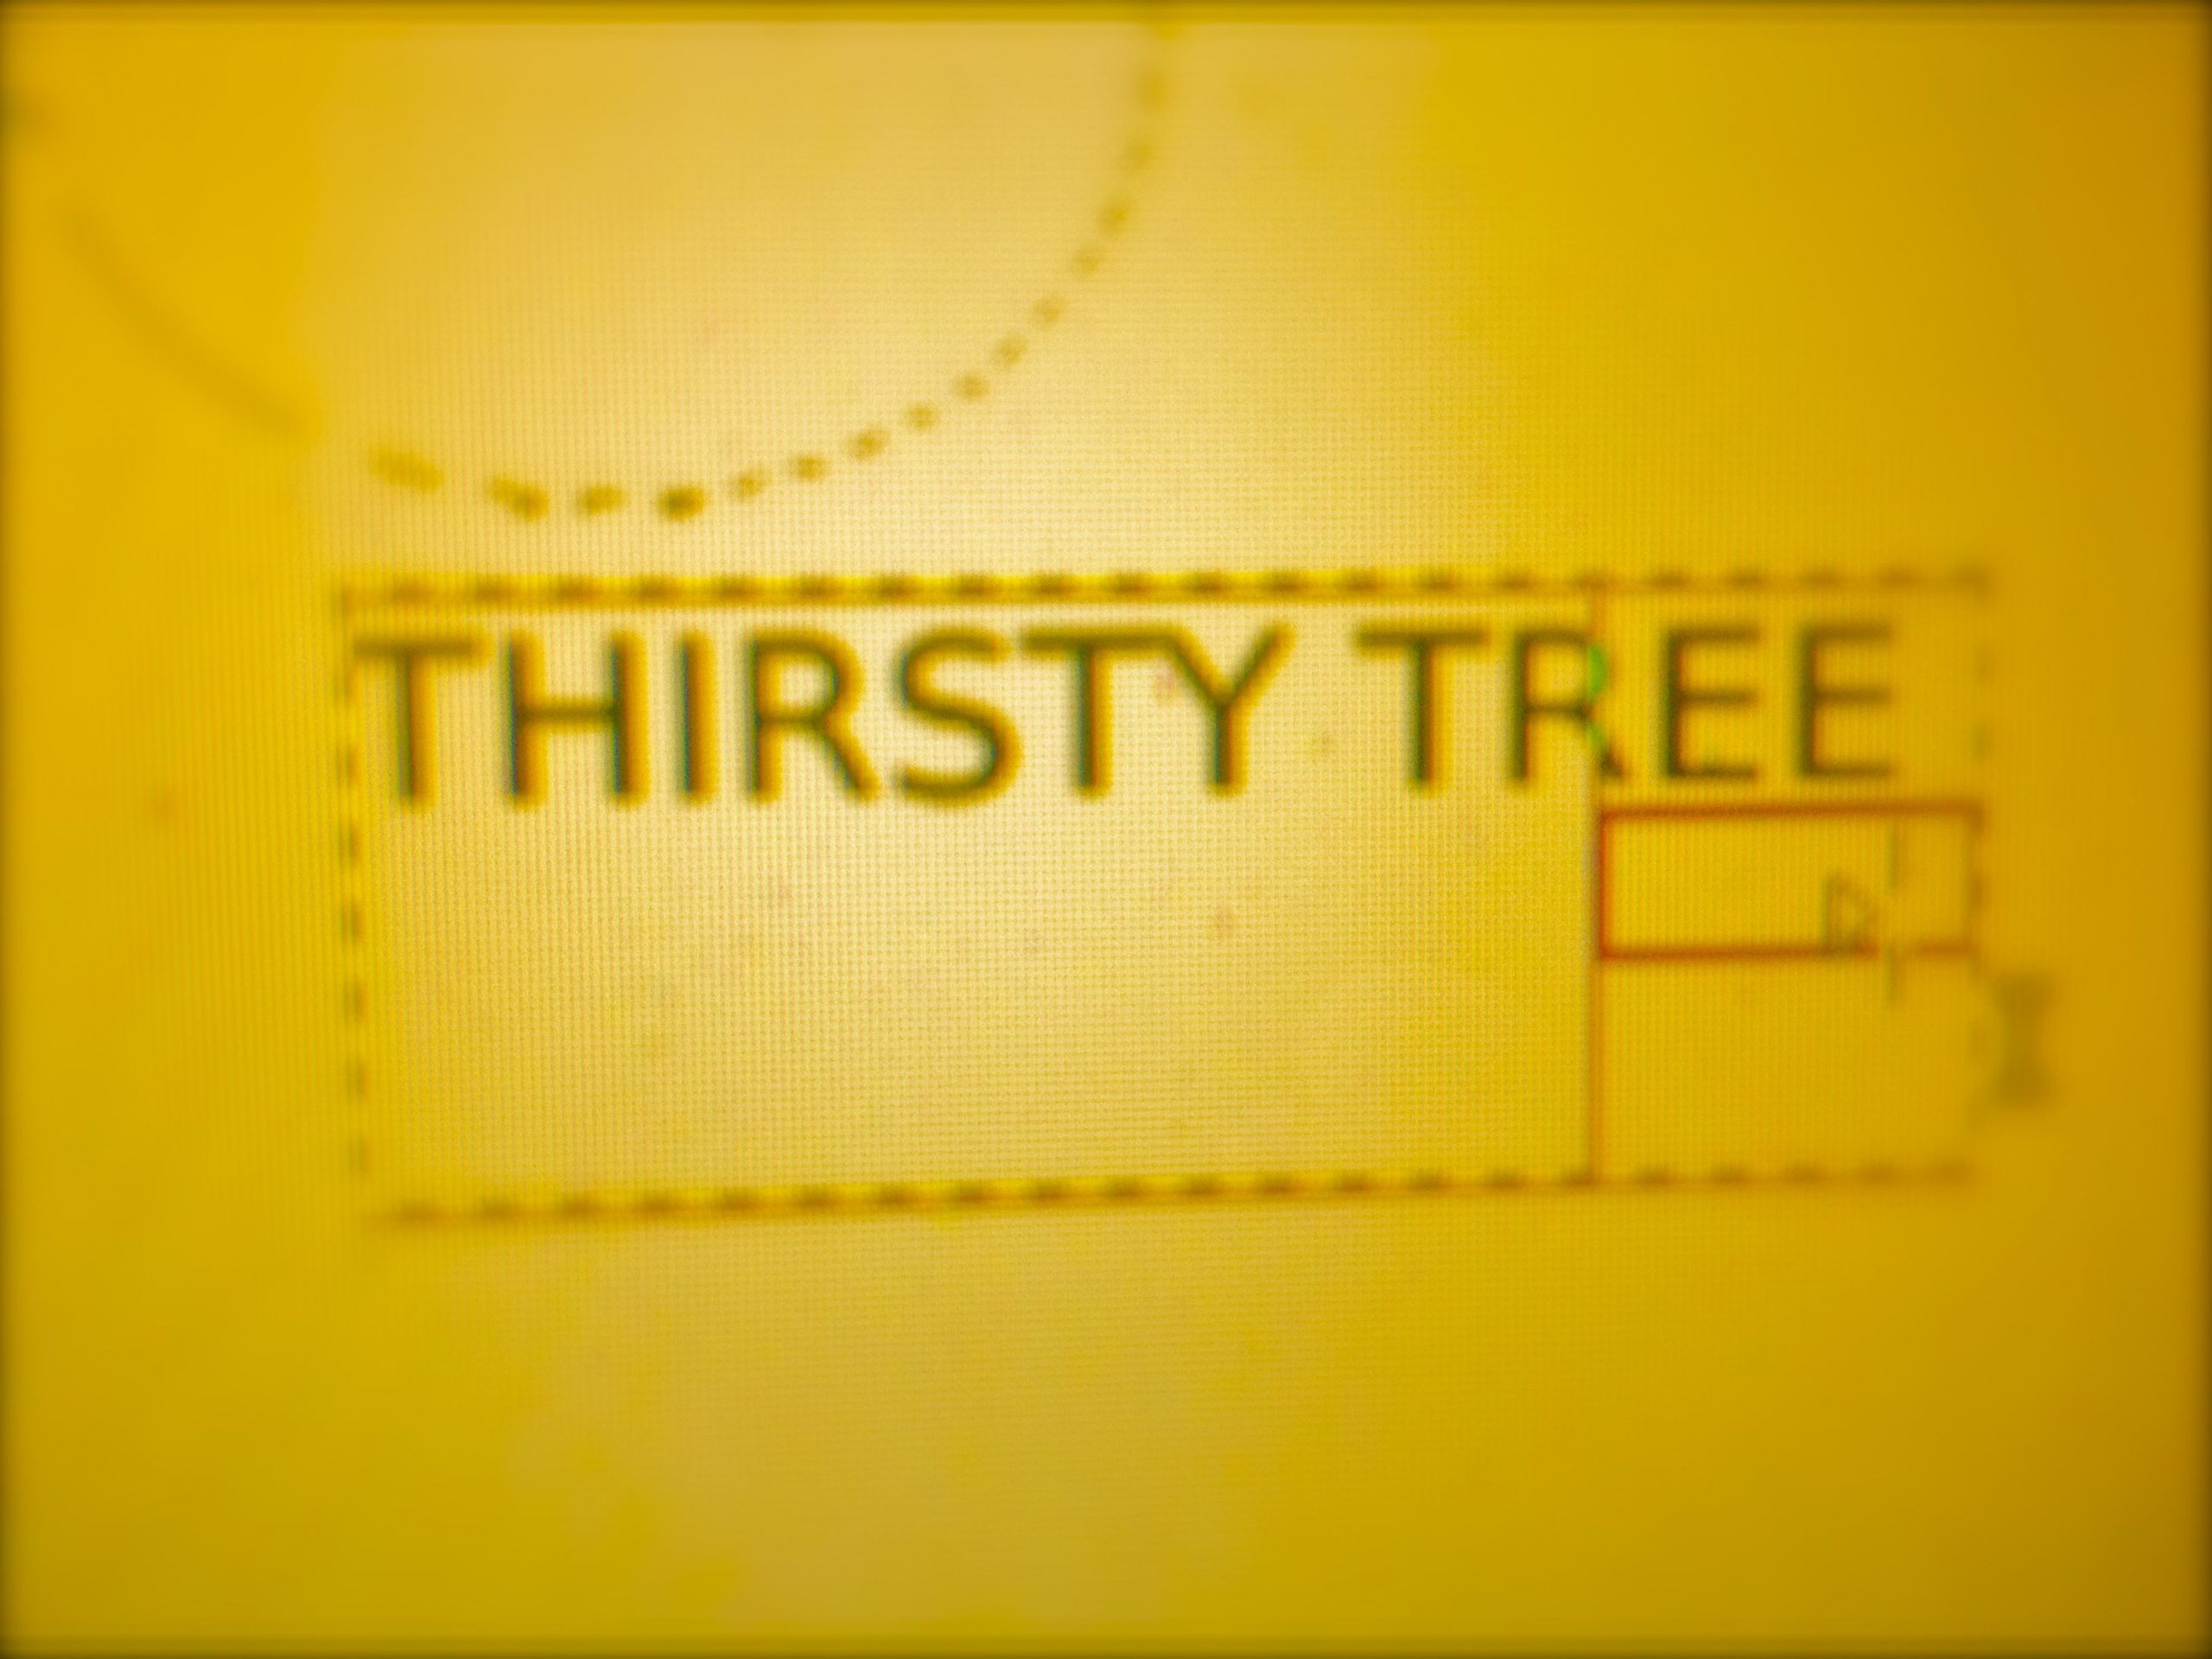 Thirsty Tree